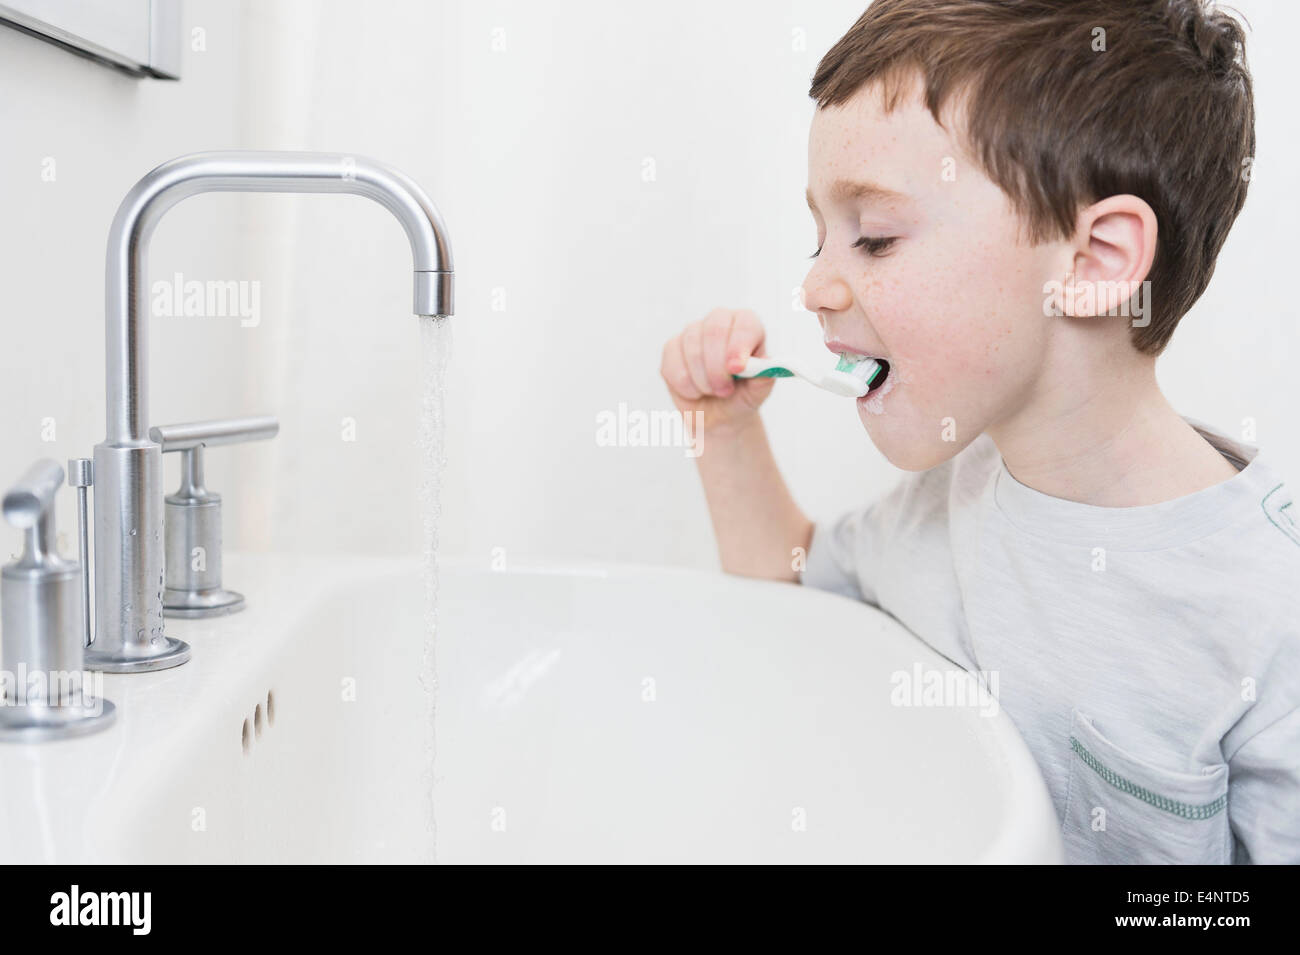 Boy (6-7) brushing teeth Stock Photo